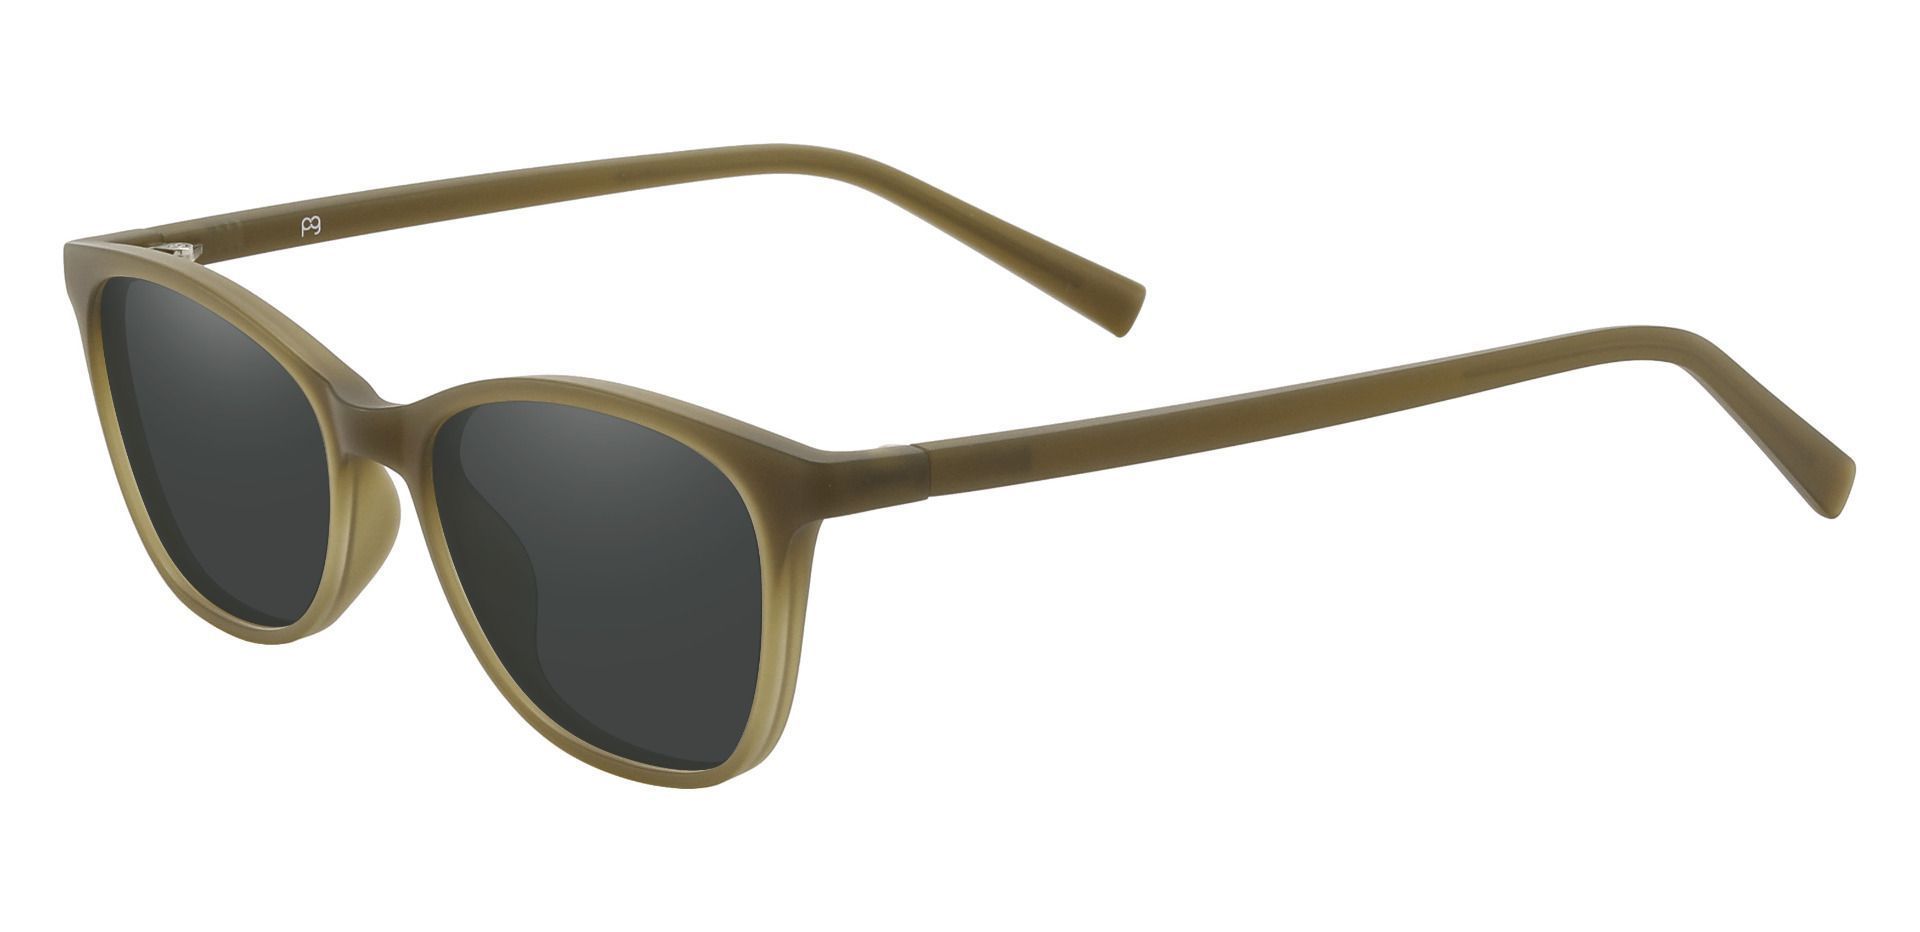 Sasha Classic Square Prescription Sunglasses - Green Frame With Gray Lenses